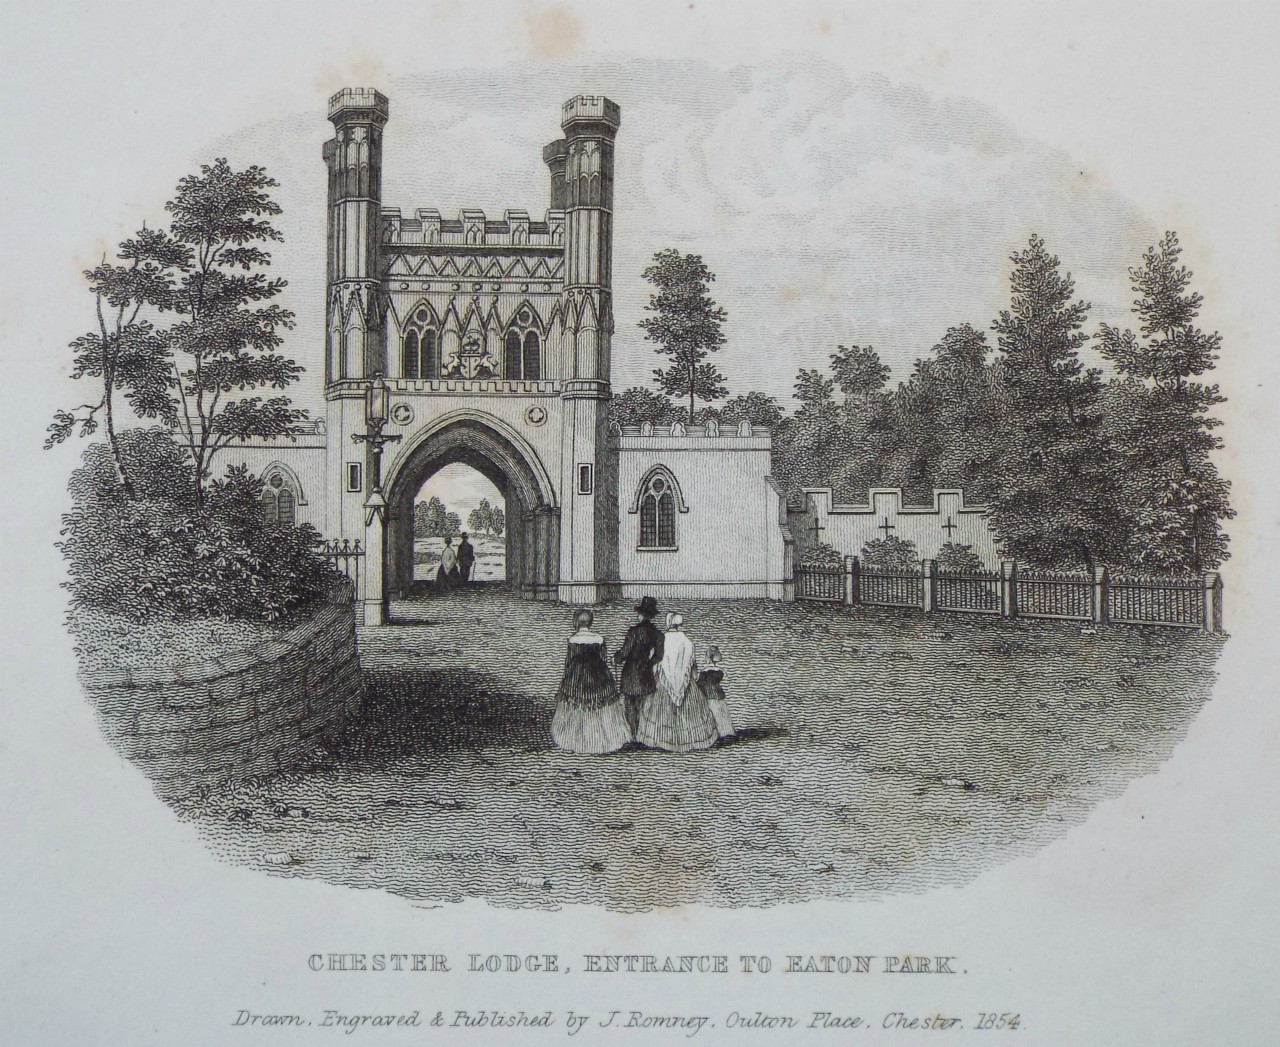 Print - Chester Lodge, Entrance to Eaton Park. - Romney